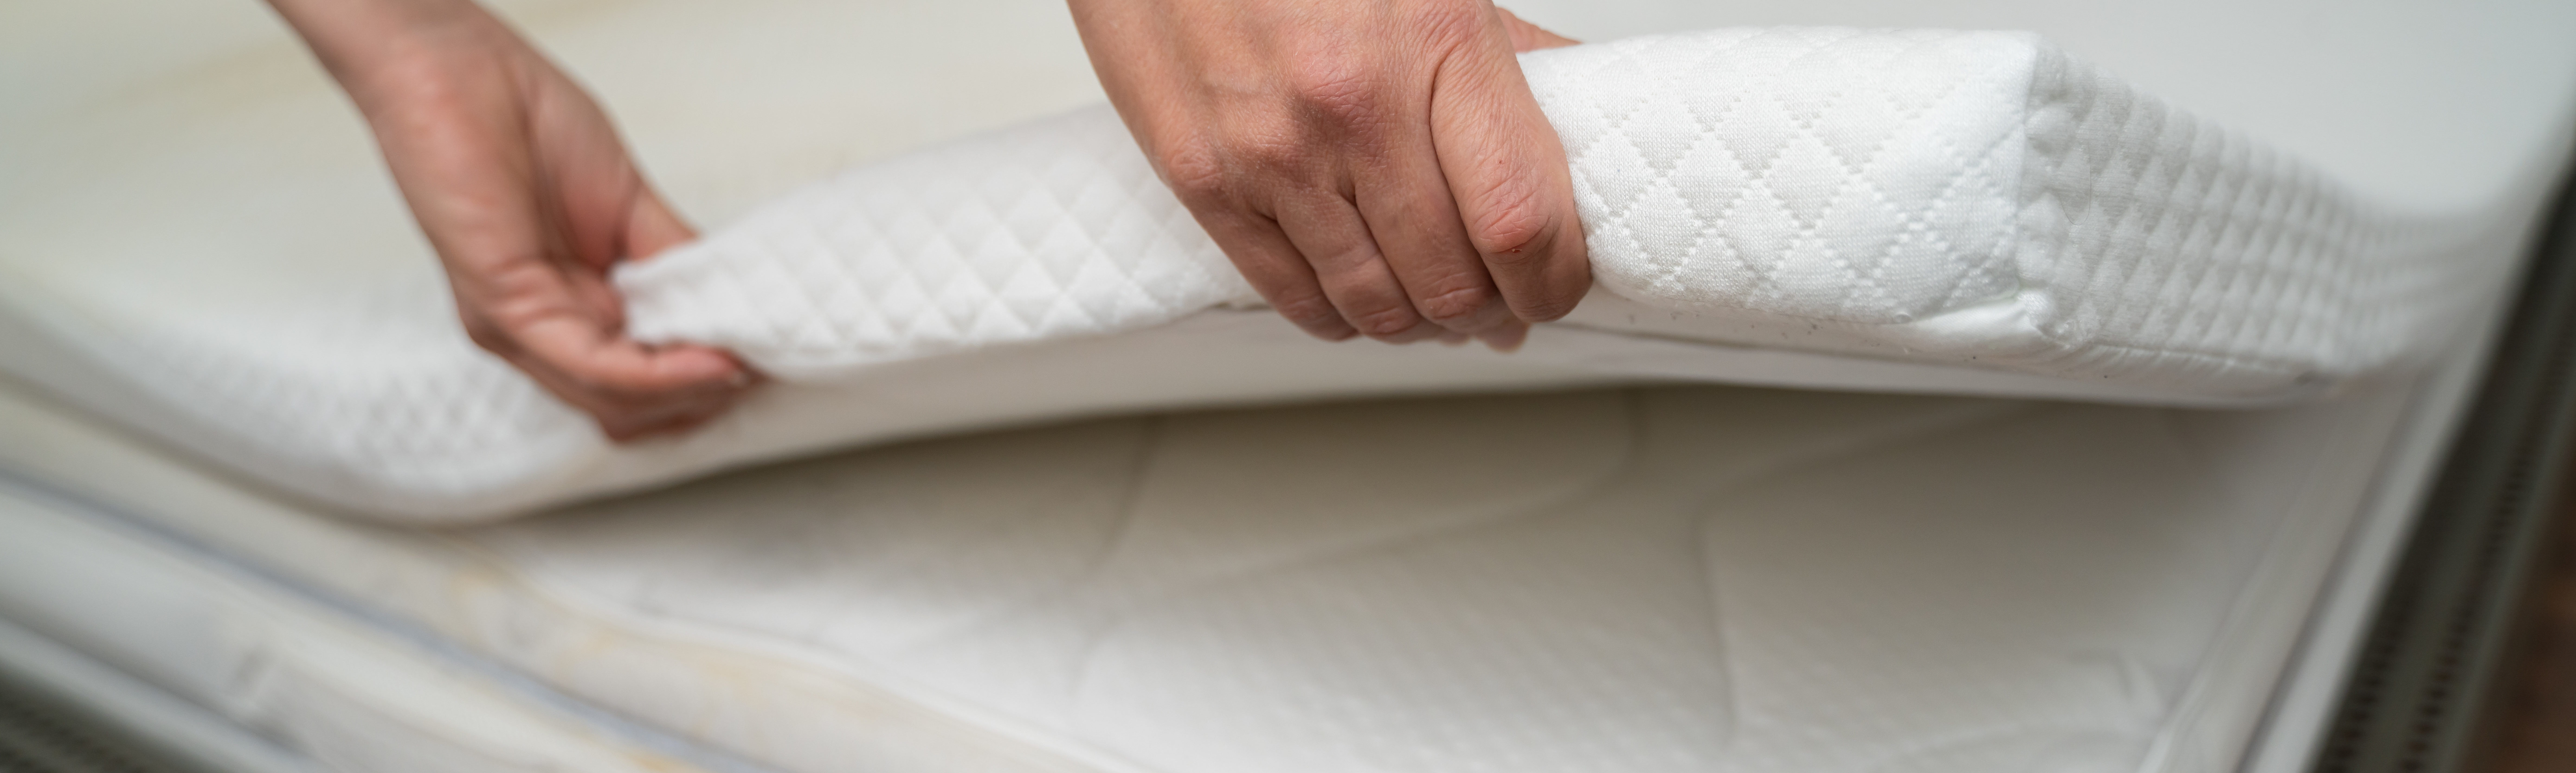 how to clean a foam mattress topper